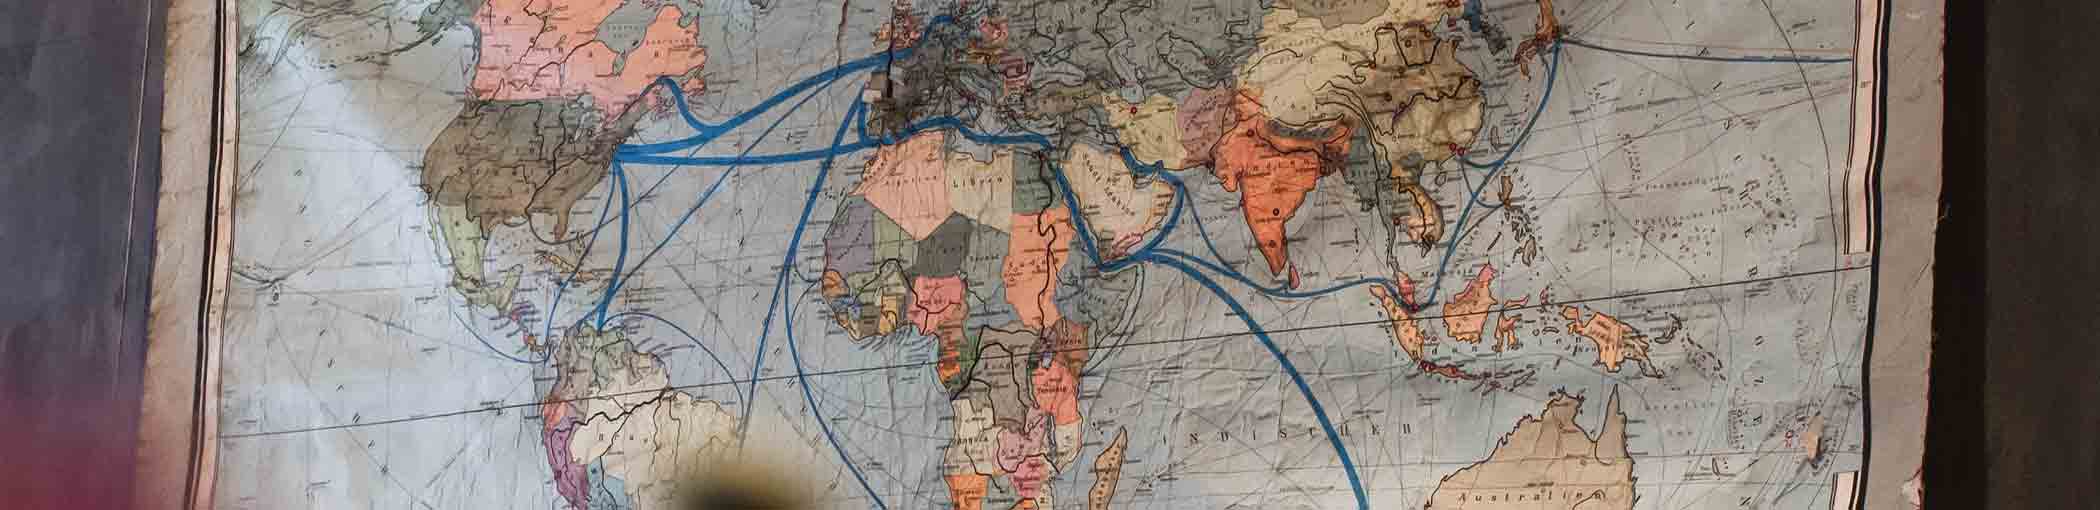 World map highlighting Africa